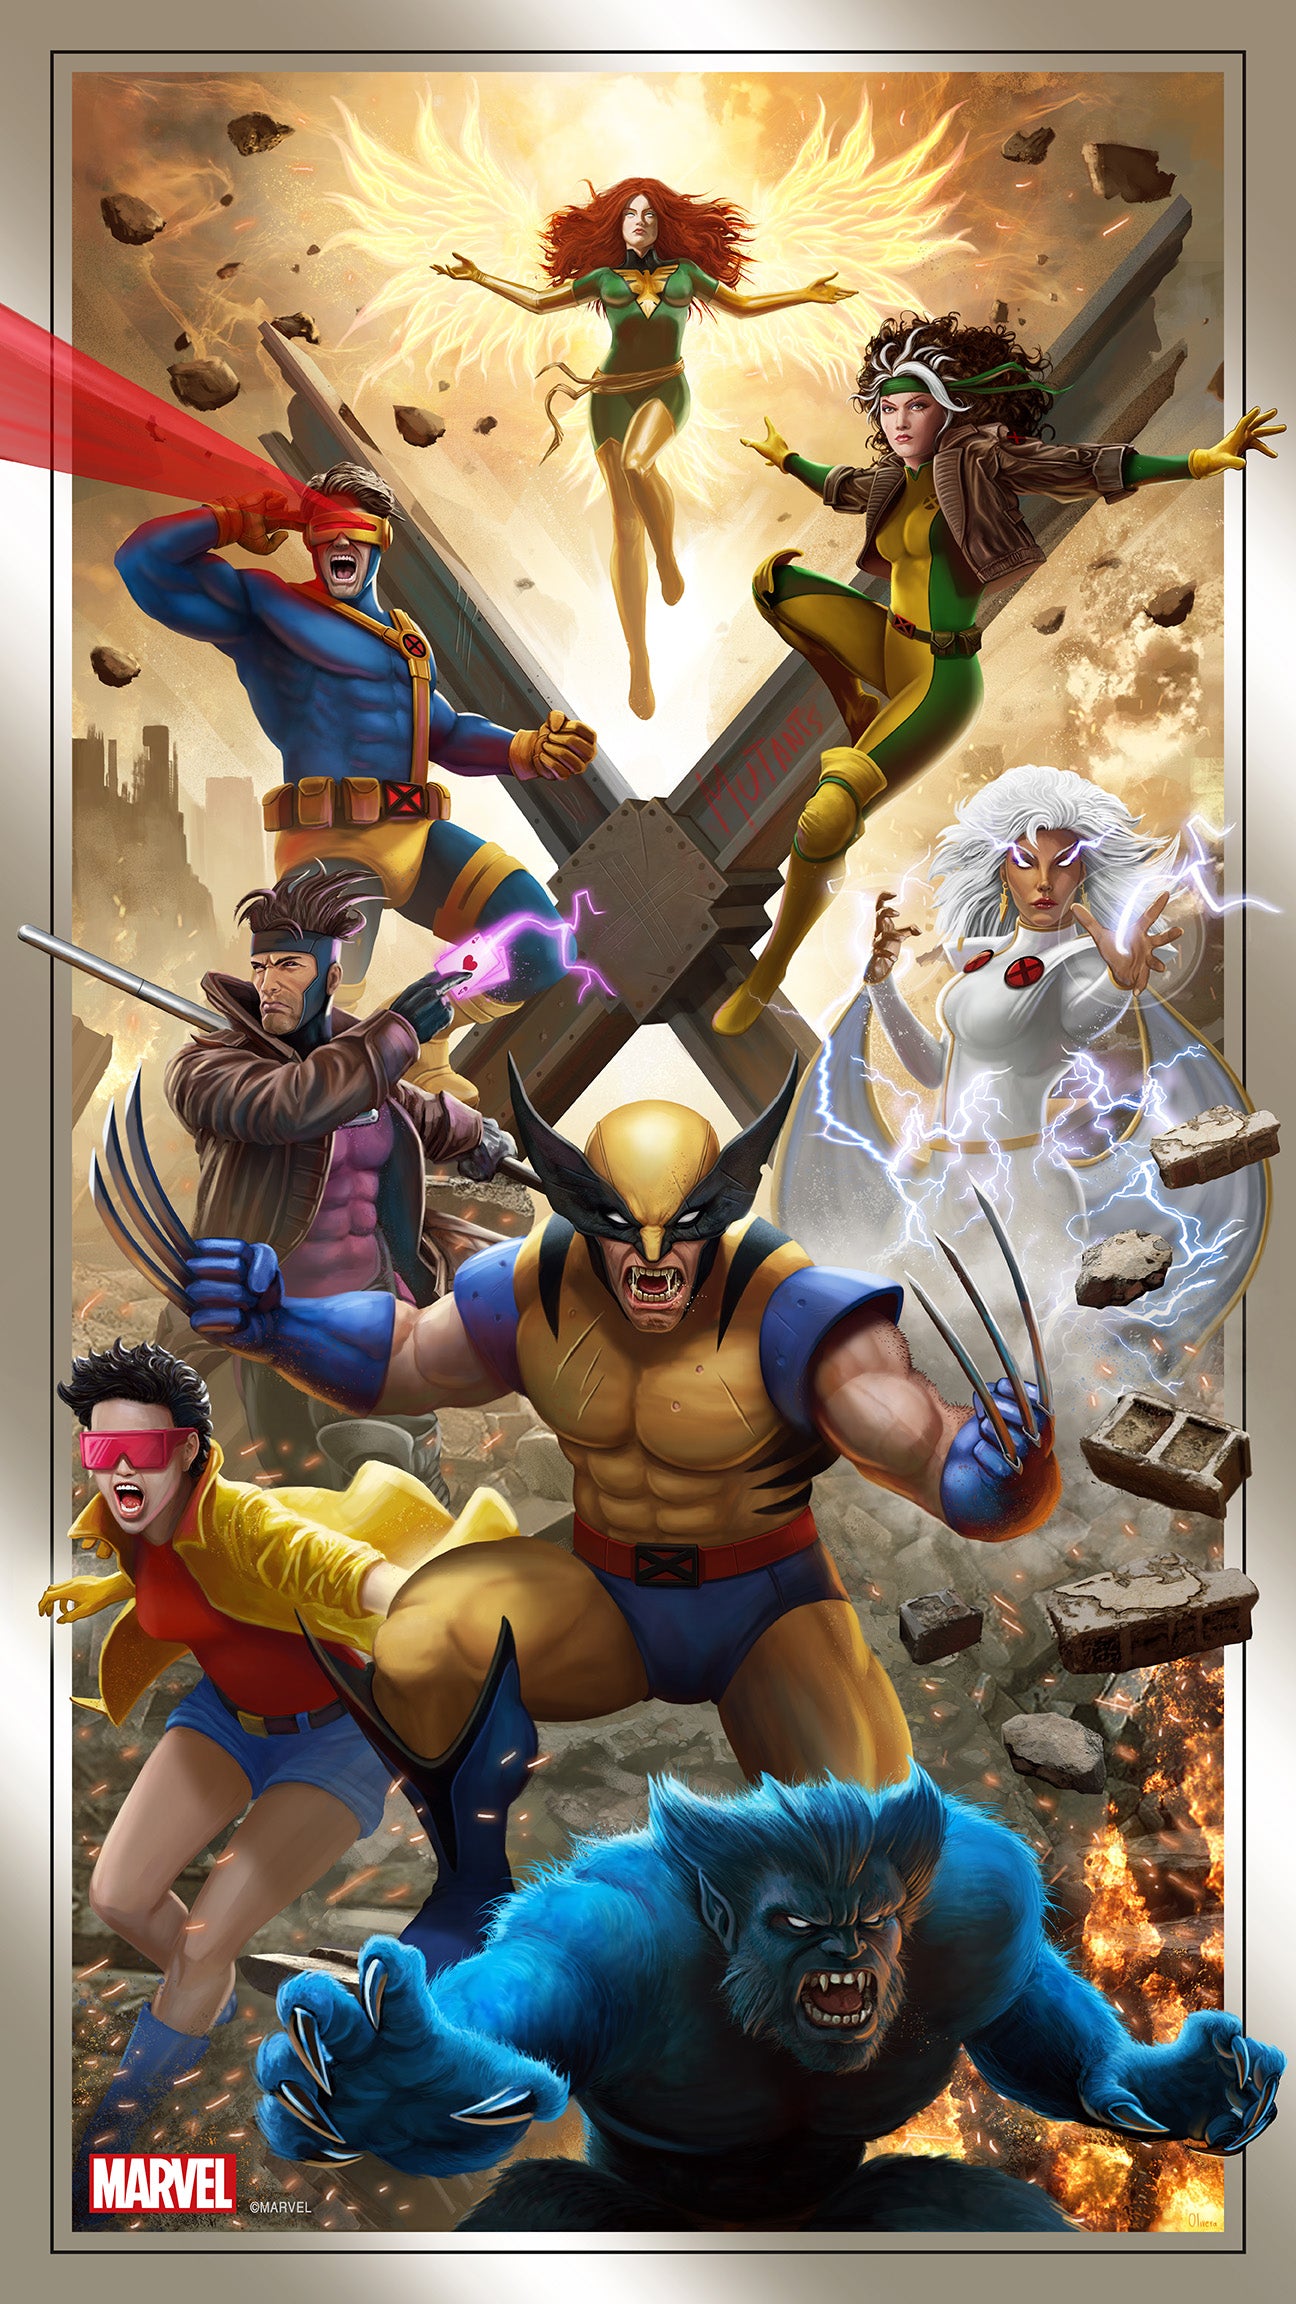 Pablo Olivera "X-Men: The Animated Series" FOIL Variant